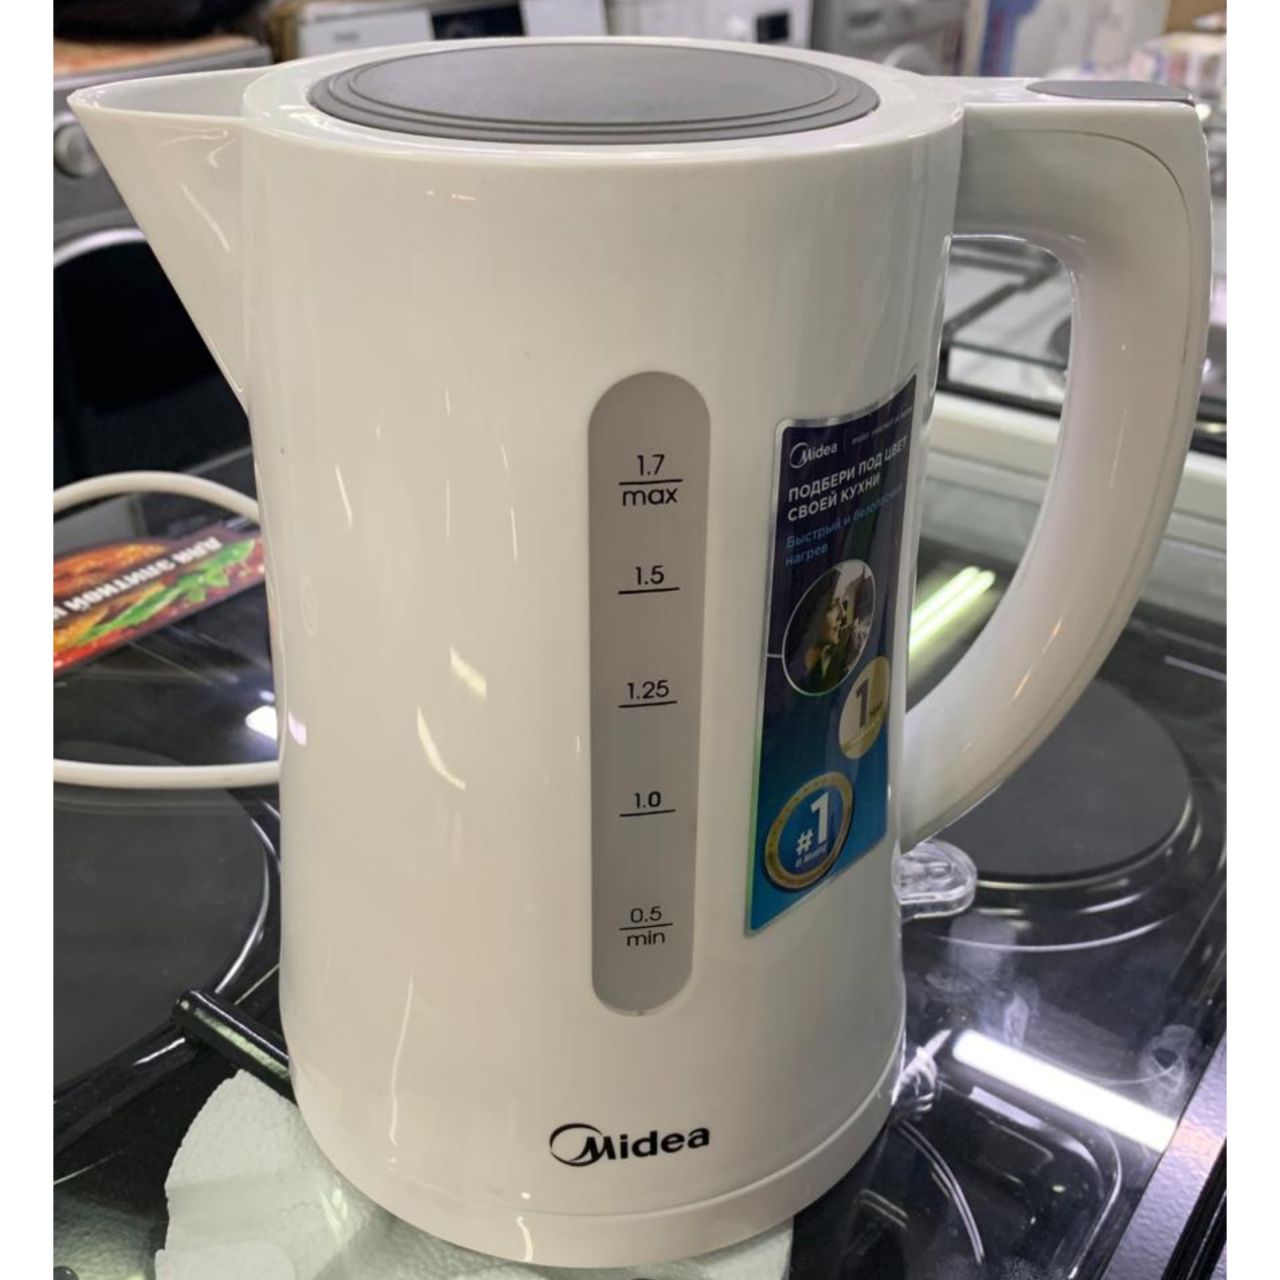 Электрический чайник Midea объемом 1.7 литра